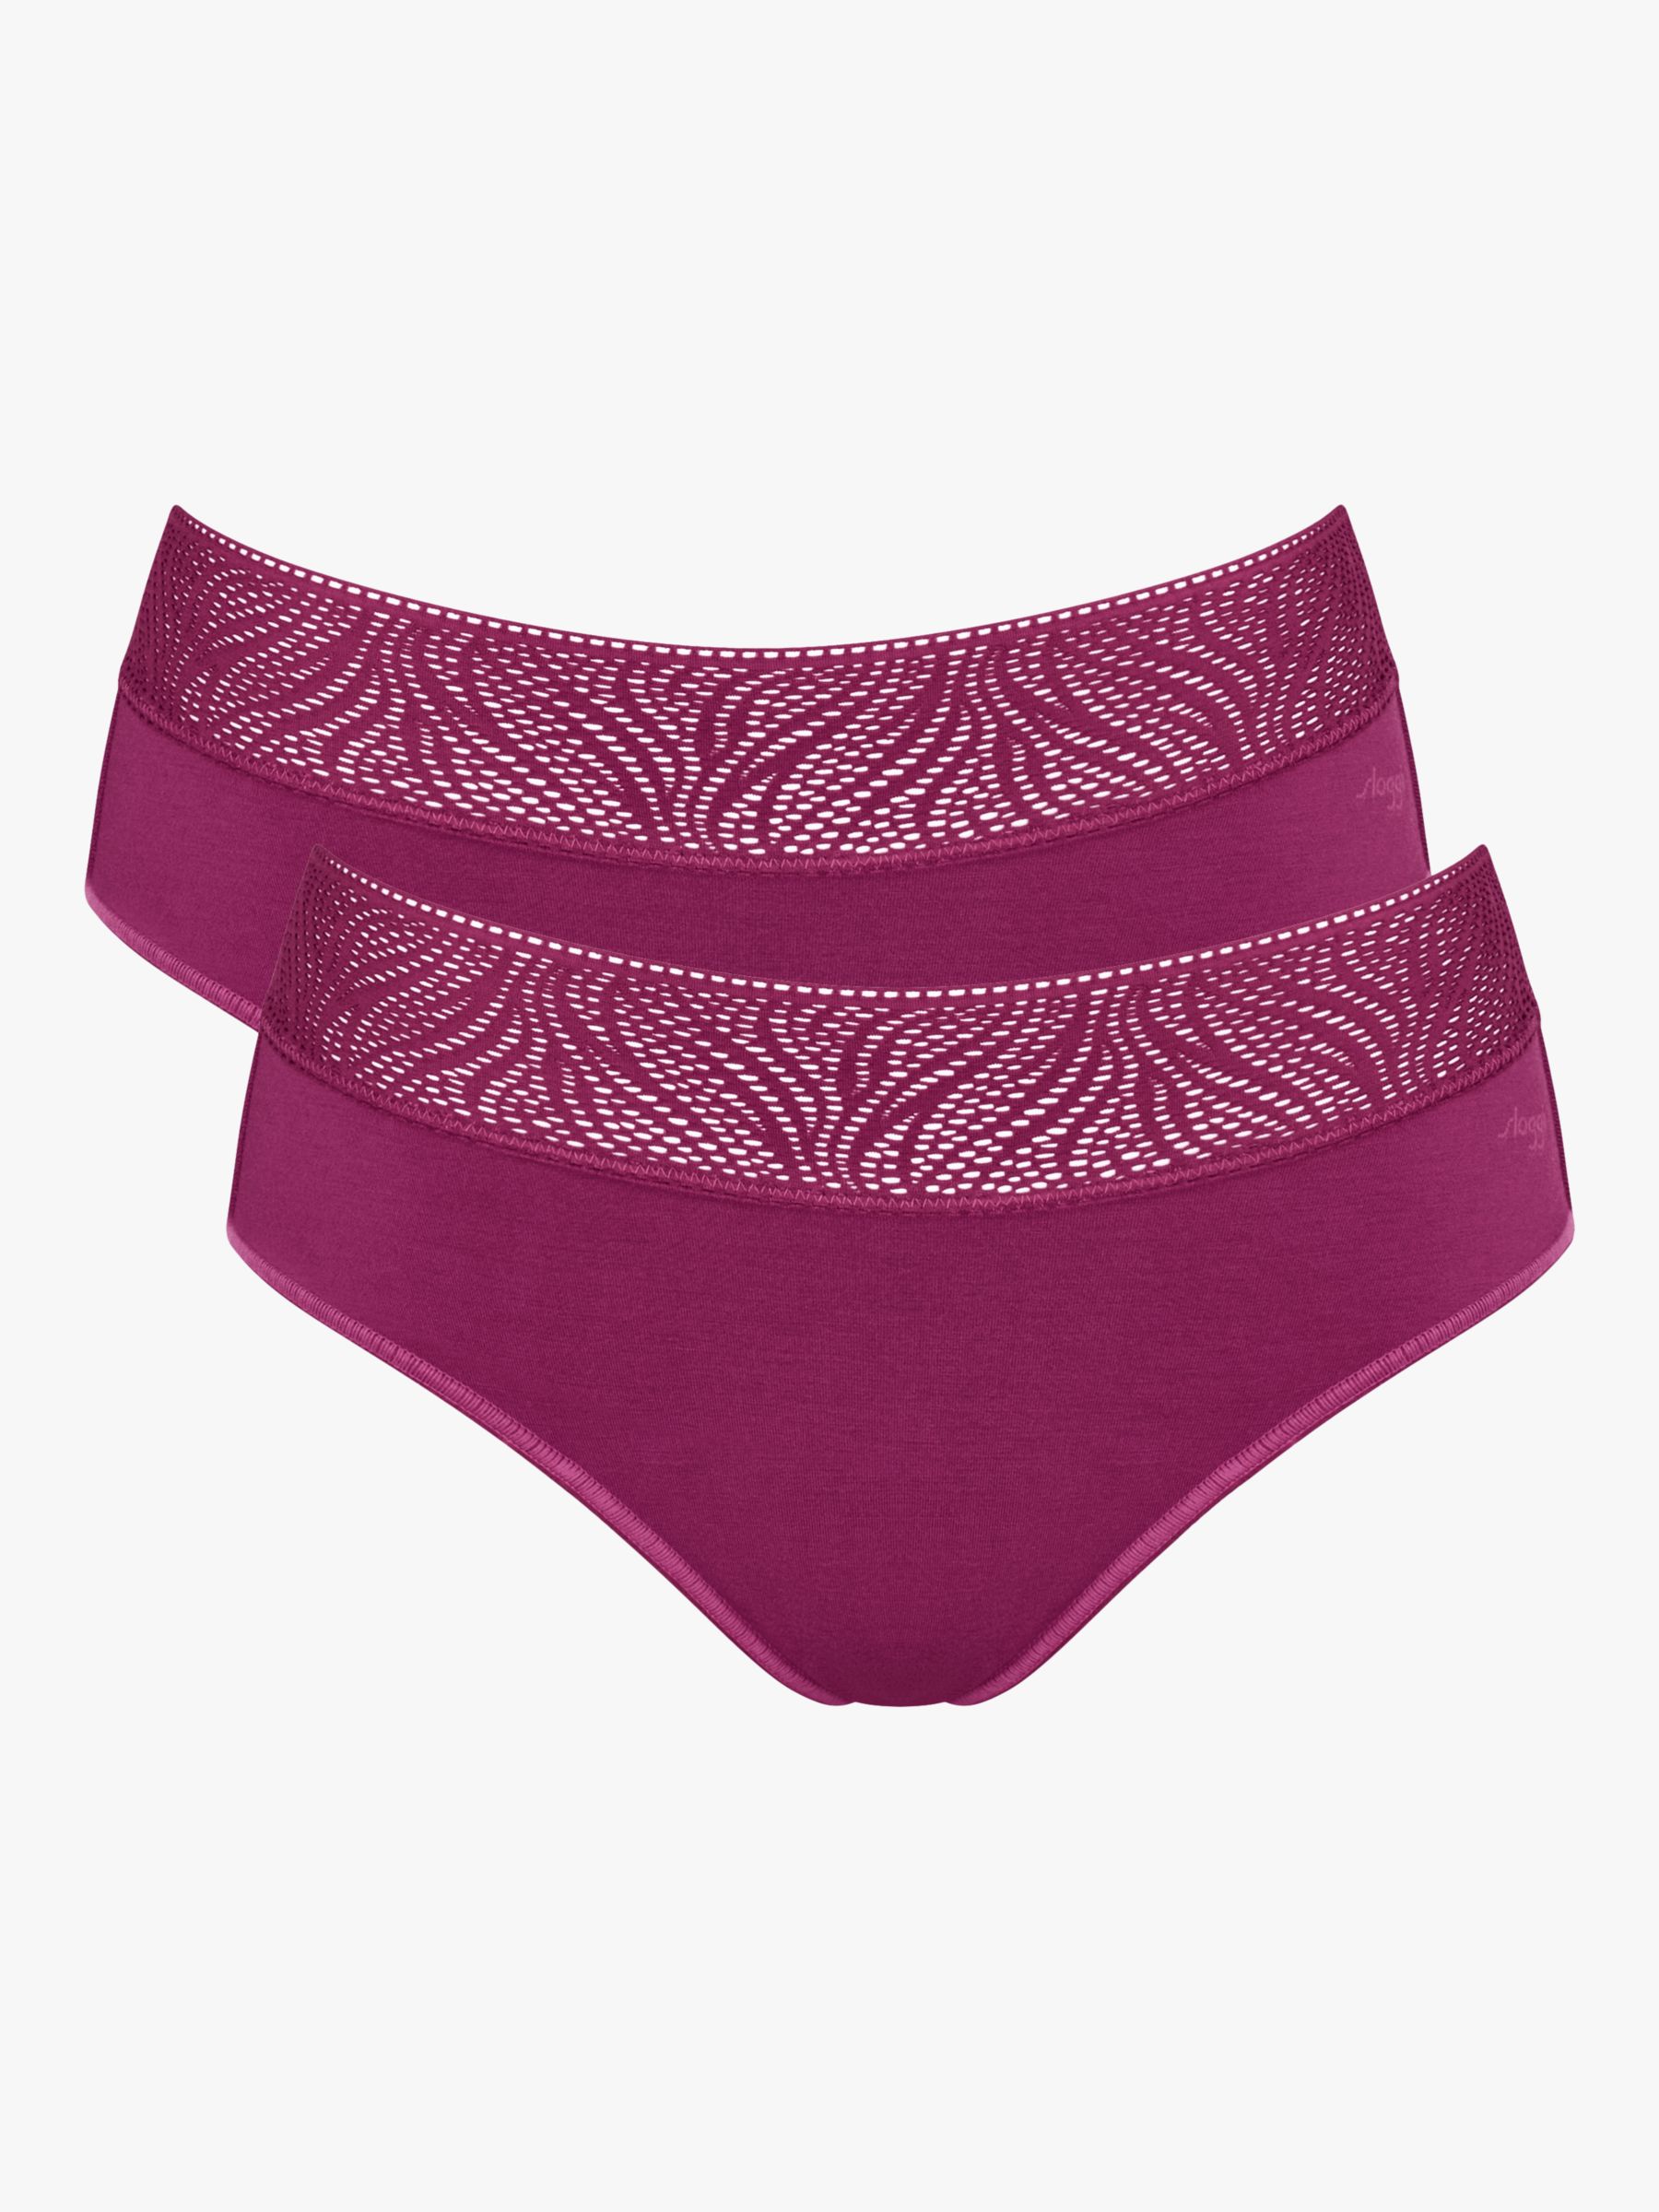 Sloggi Zero Modal 2.0 hipster panty, purple • Price 8.5 €